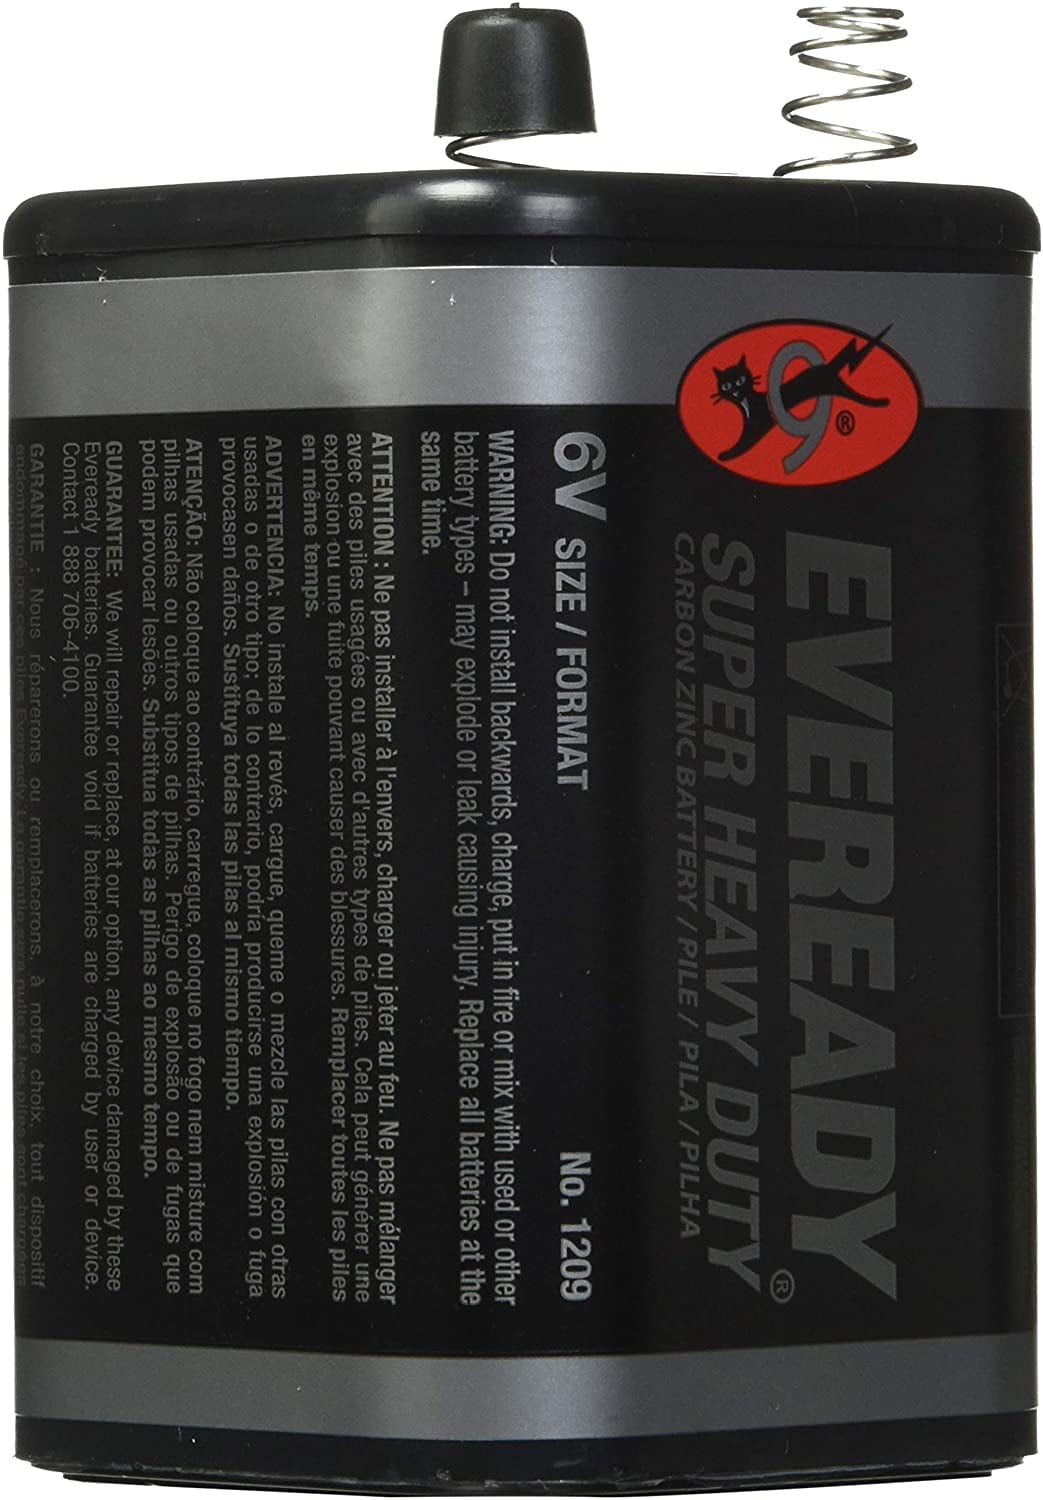 Eveready Super Heavy Duty Battery, 6 Volt [1209] 1 ea 